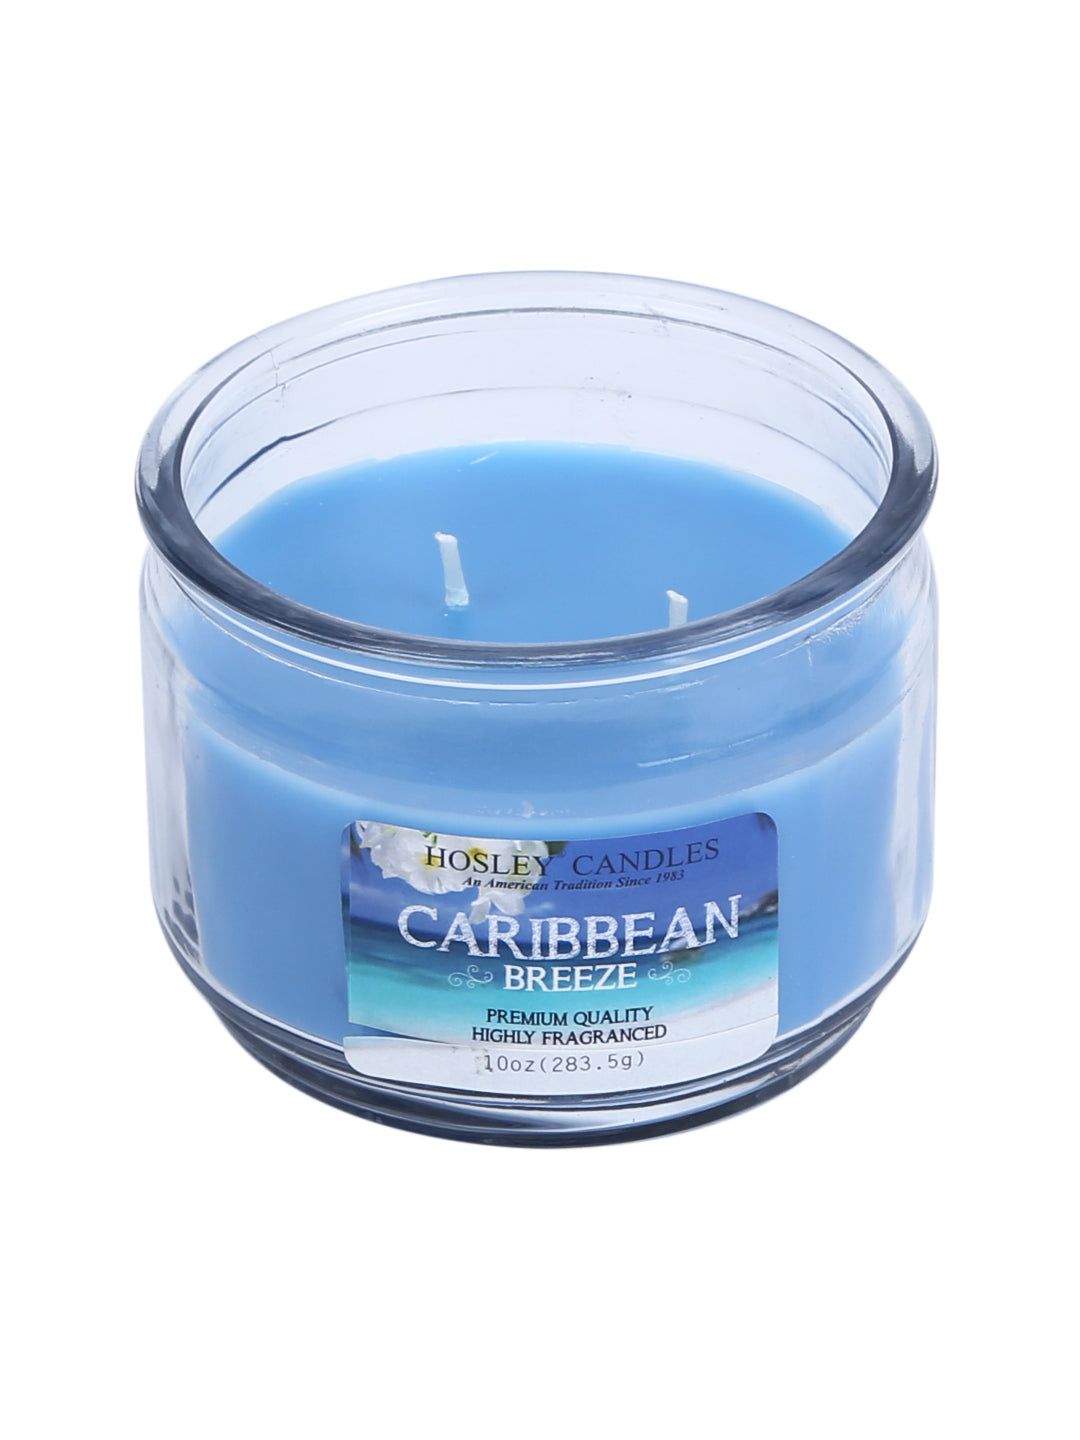 Hosley® Caribbean Breeze Highly Fragranced, 2 Wick, 10 Oz wax, Jar Candle